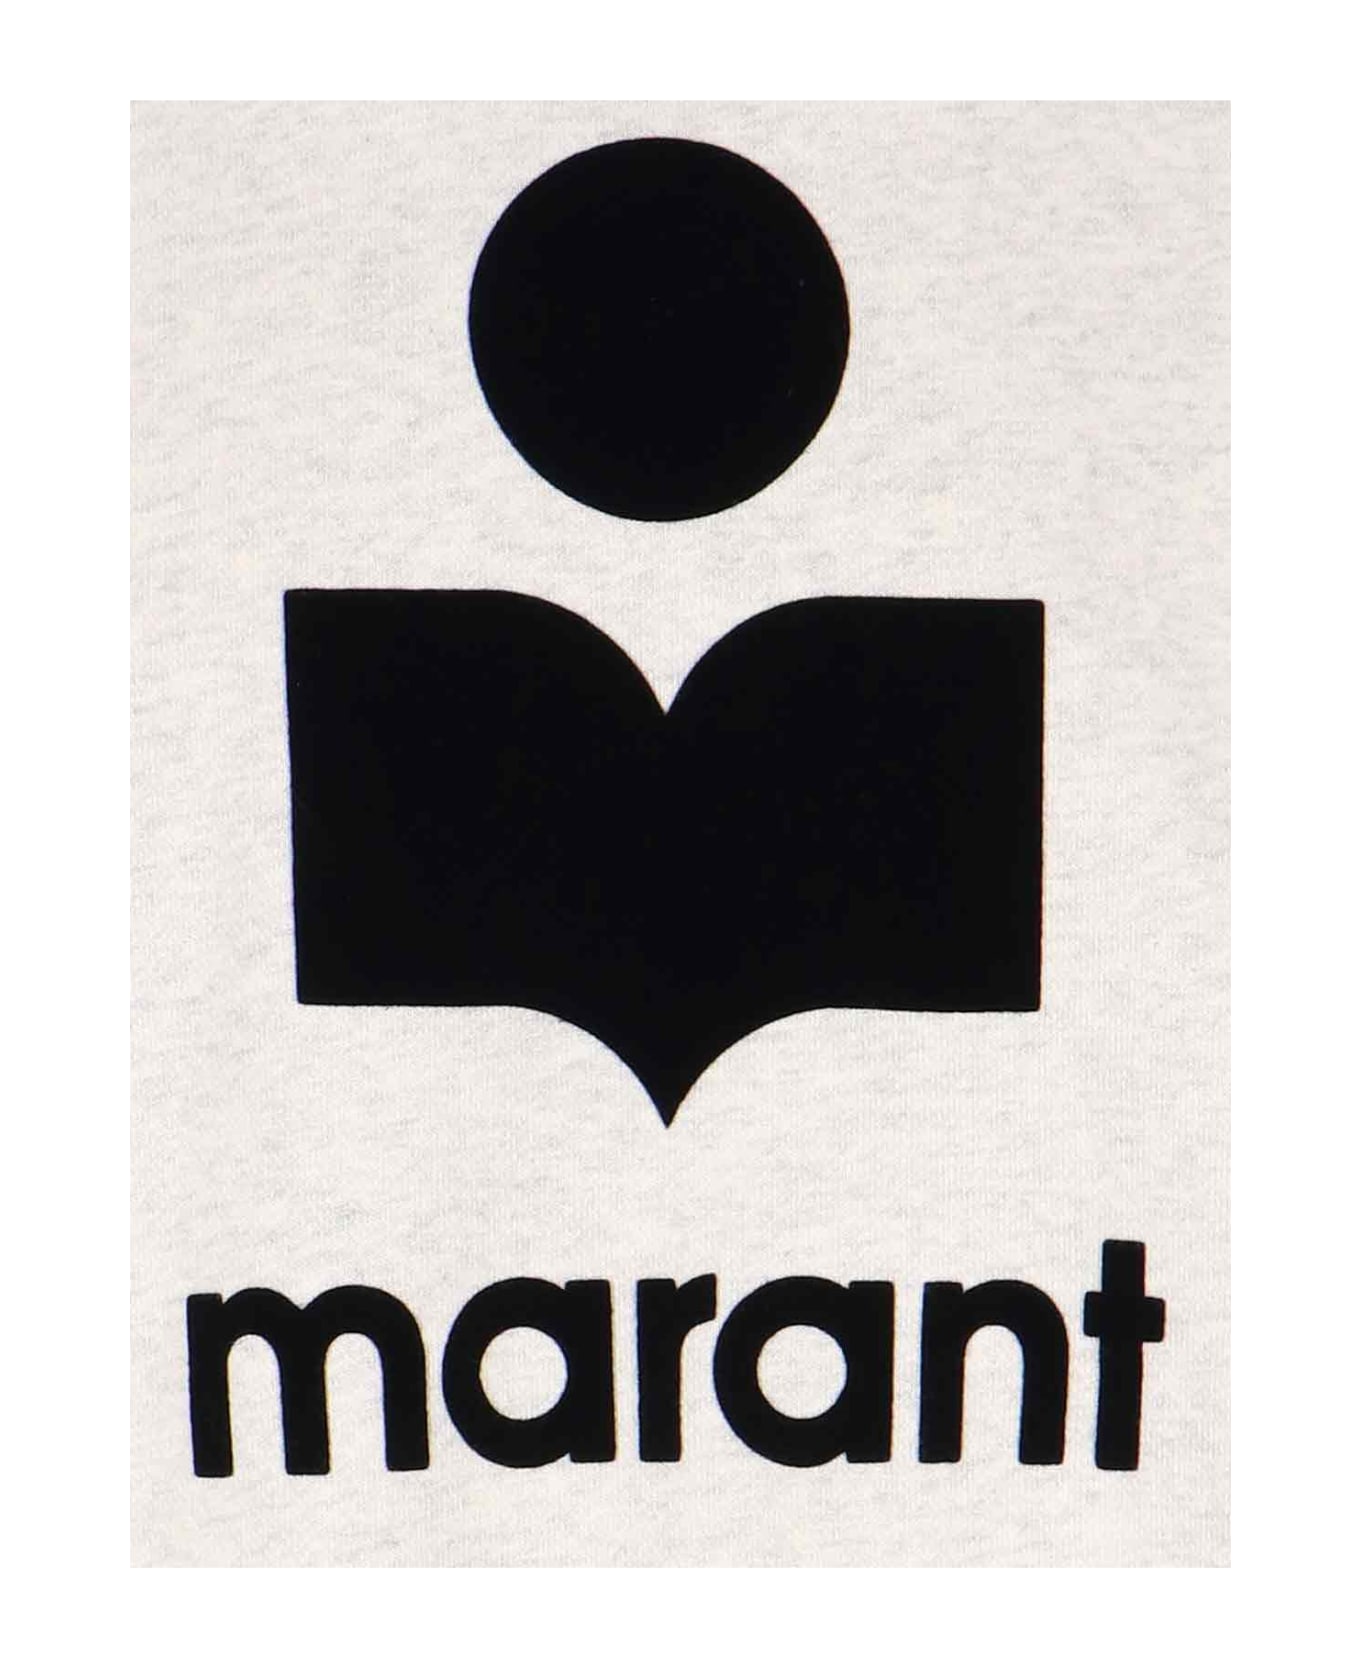 Marant Étoile Mikoy Logo Cotton Sweatshirt - Cream